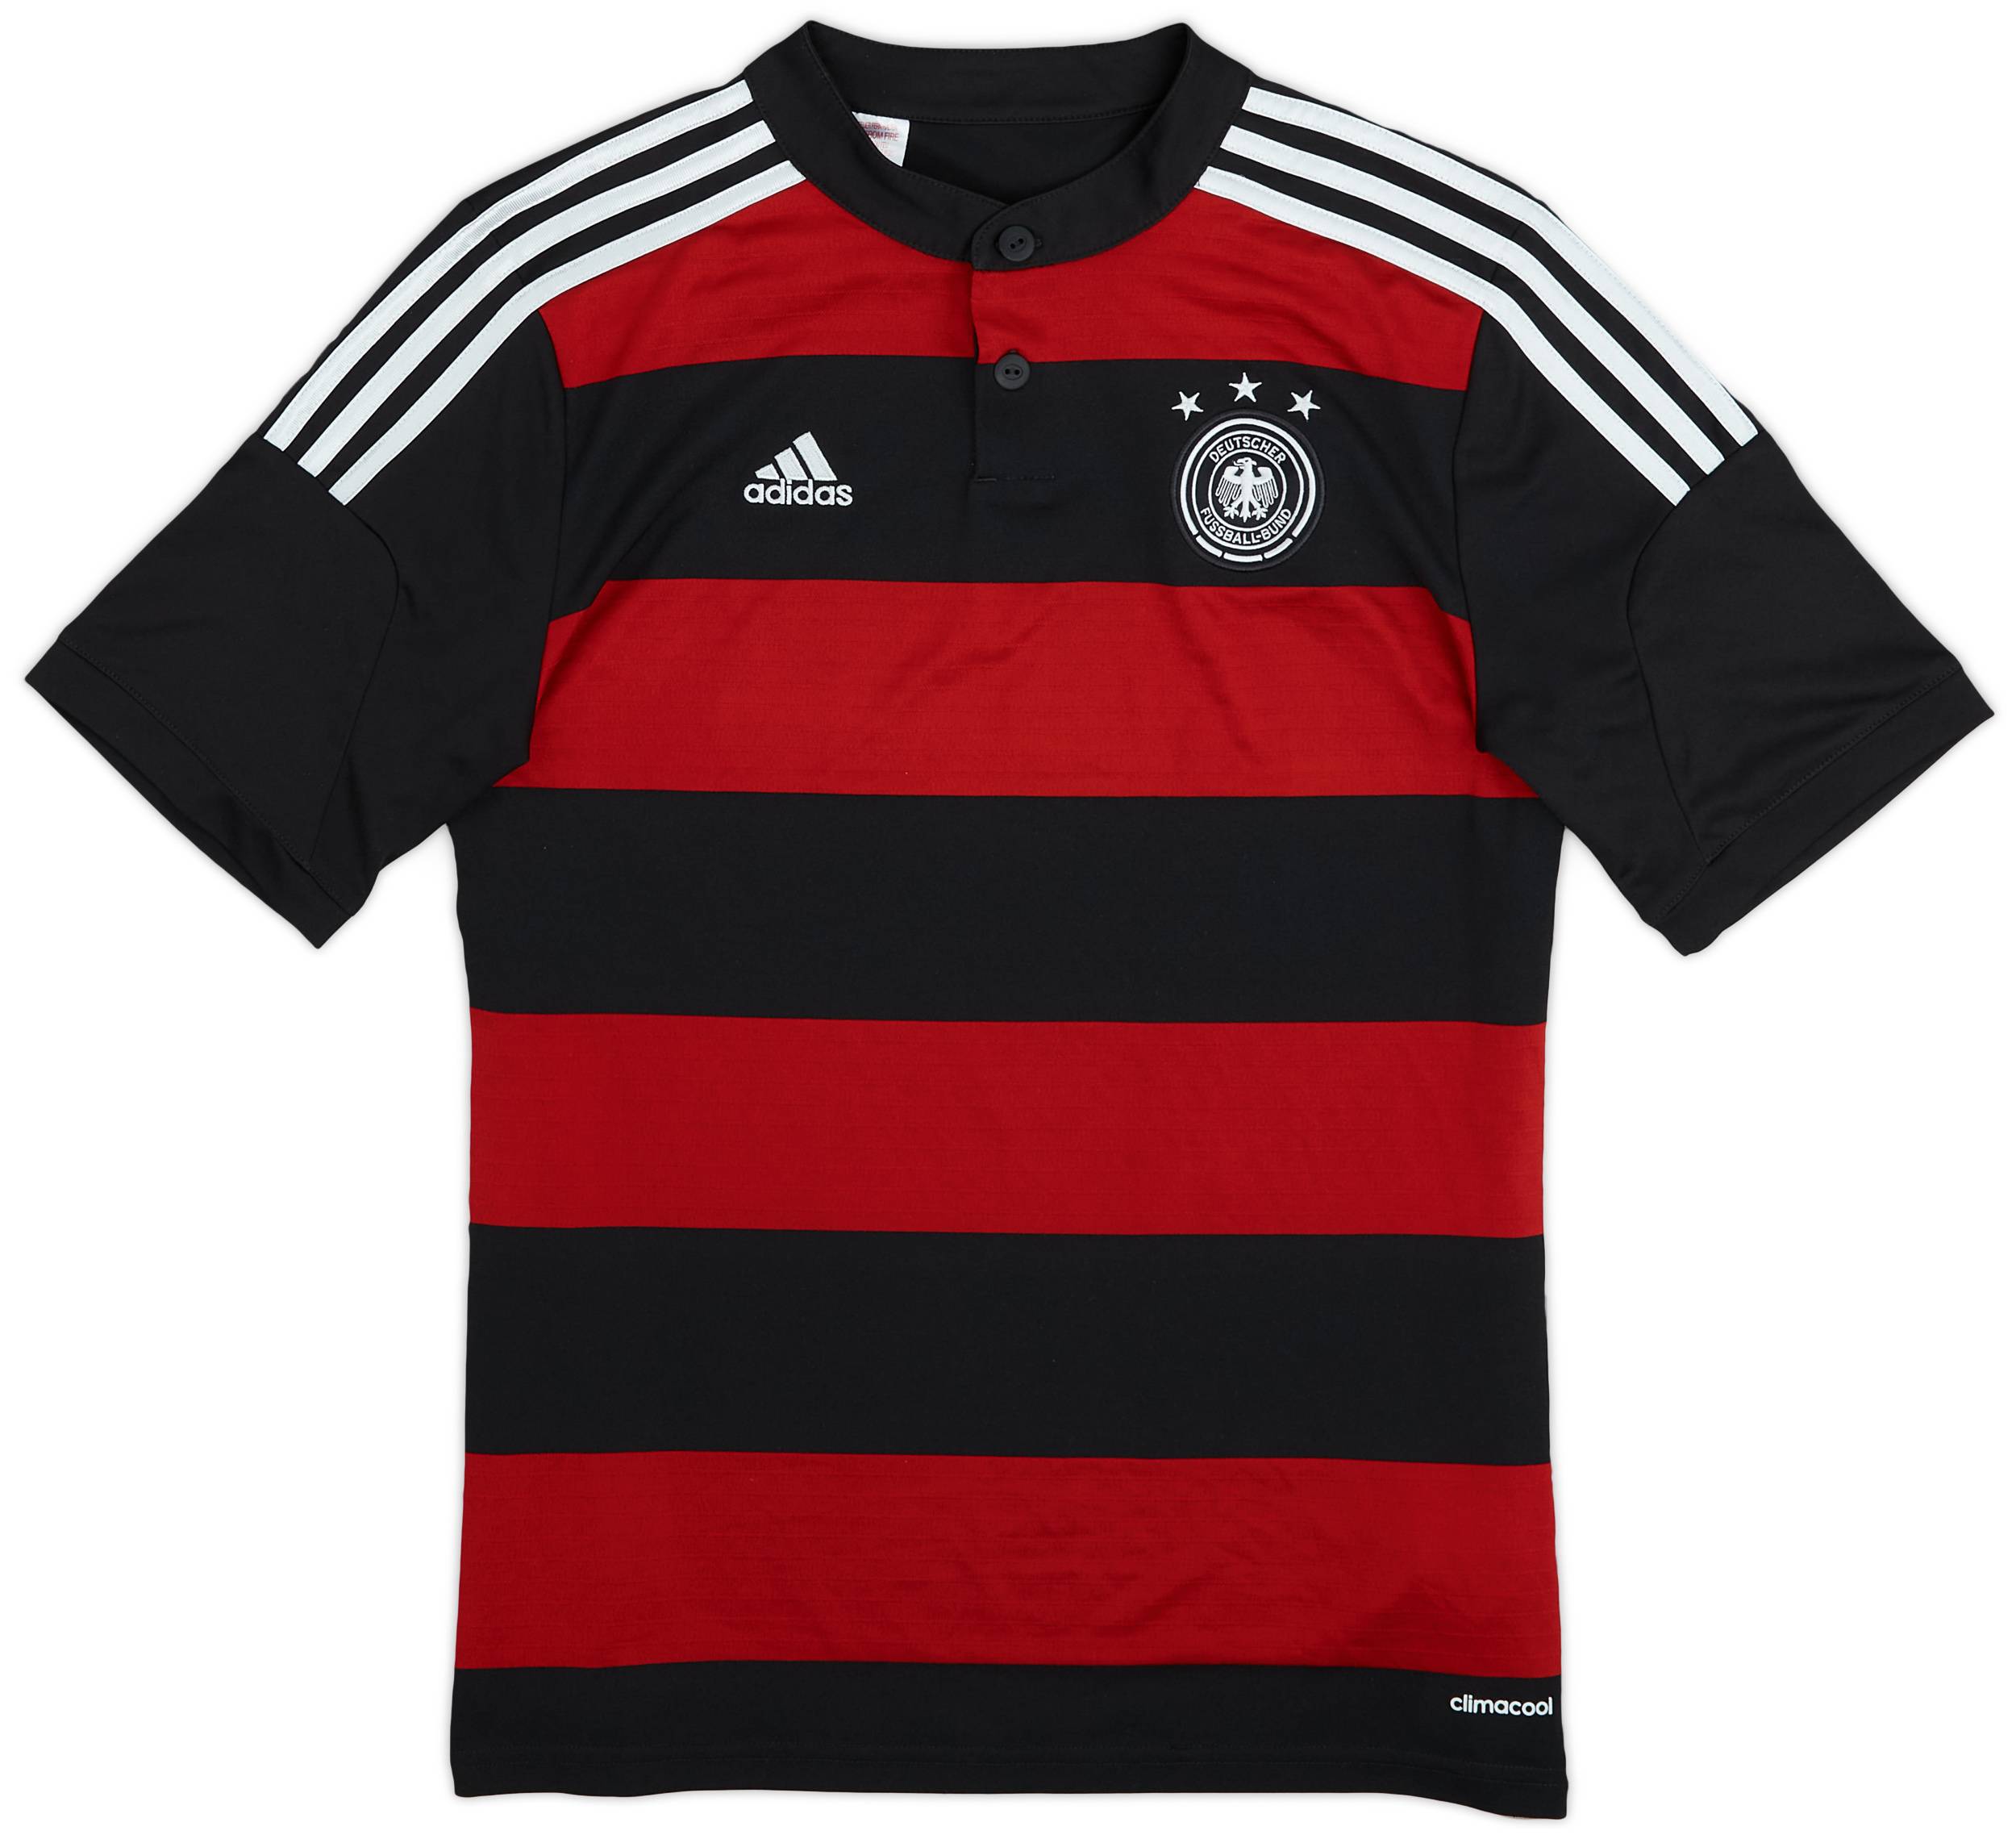 2014-15 Germany Away Shirt - 8/10 - (XL.Boys)